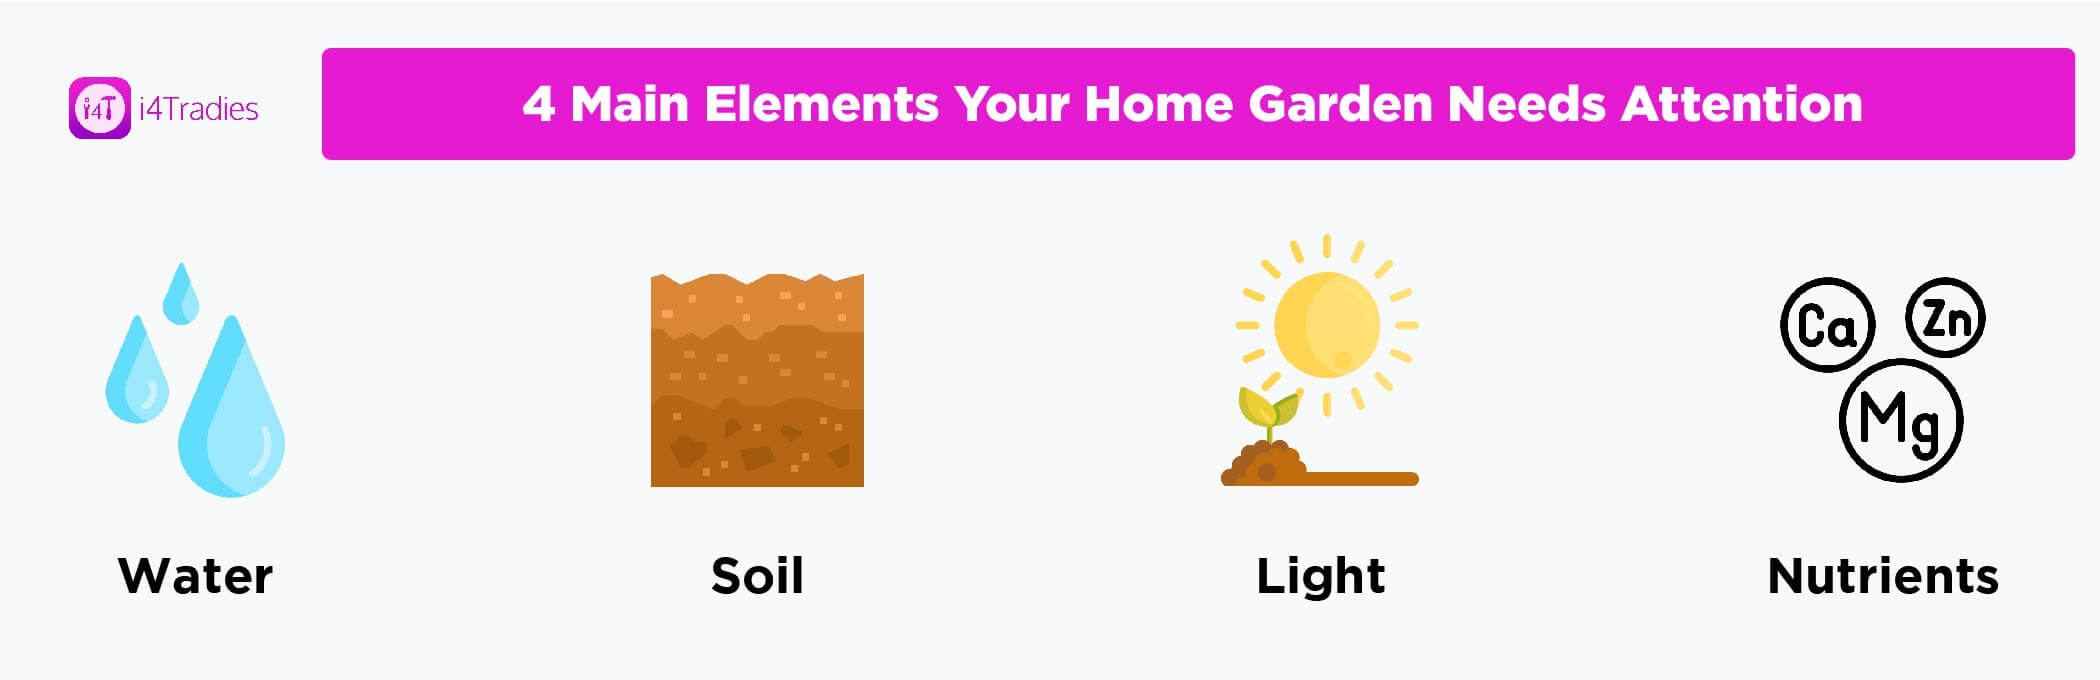 4 main elements that your garden needs - i4Tradies